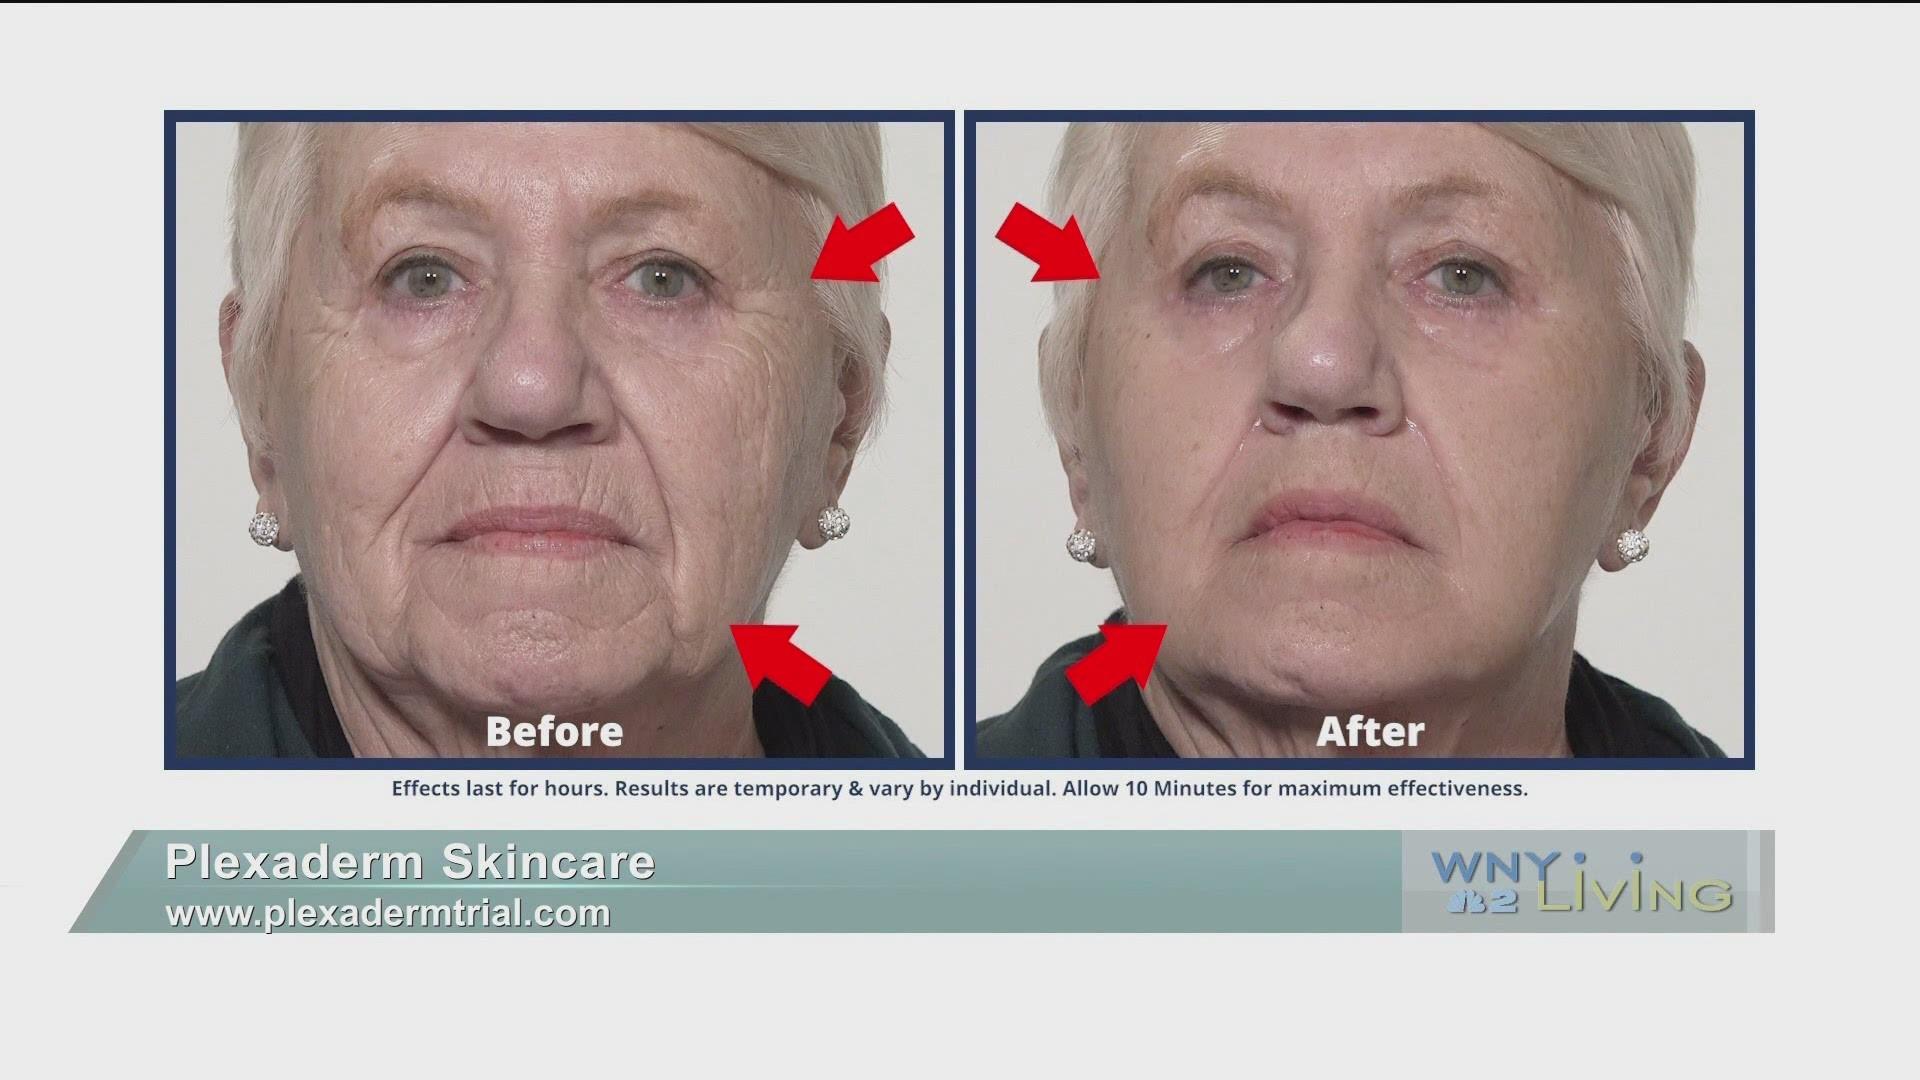 WNY Living - April 17 - Plexaderm Skincare (THIS VIDEO IS SPONSORED BY PLEXADERM SKINCARE)